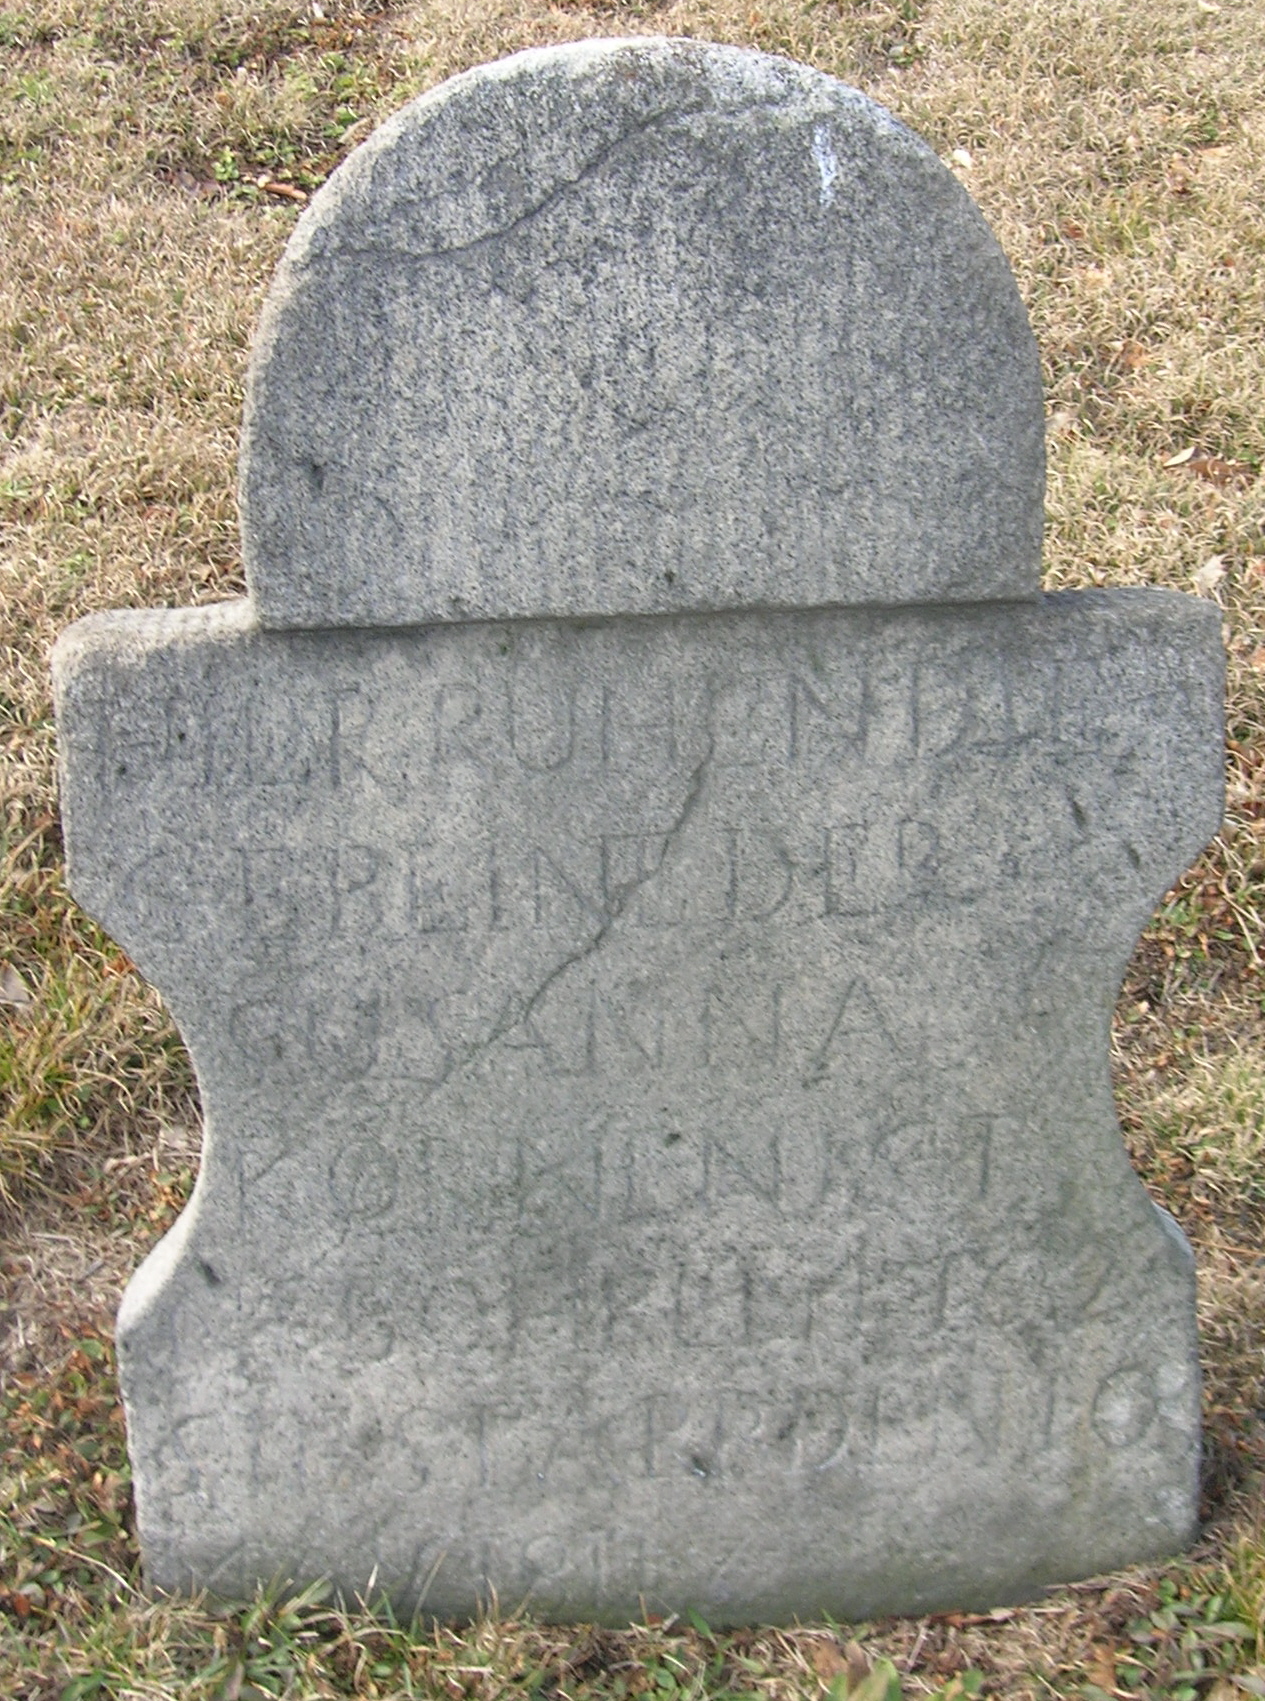 Tombstone of Susanna Korn, wife of Michael Korn, Sr., Southampton Township, Somerset County, PA. Photo taken in 2007